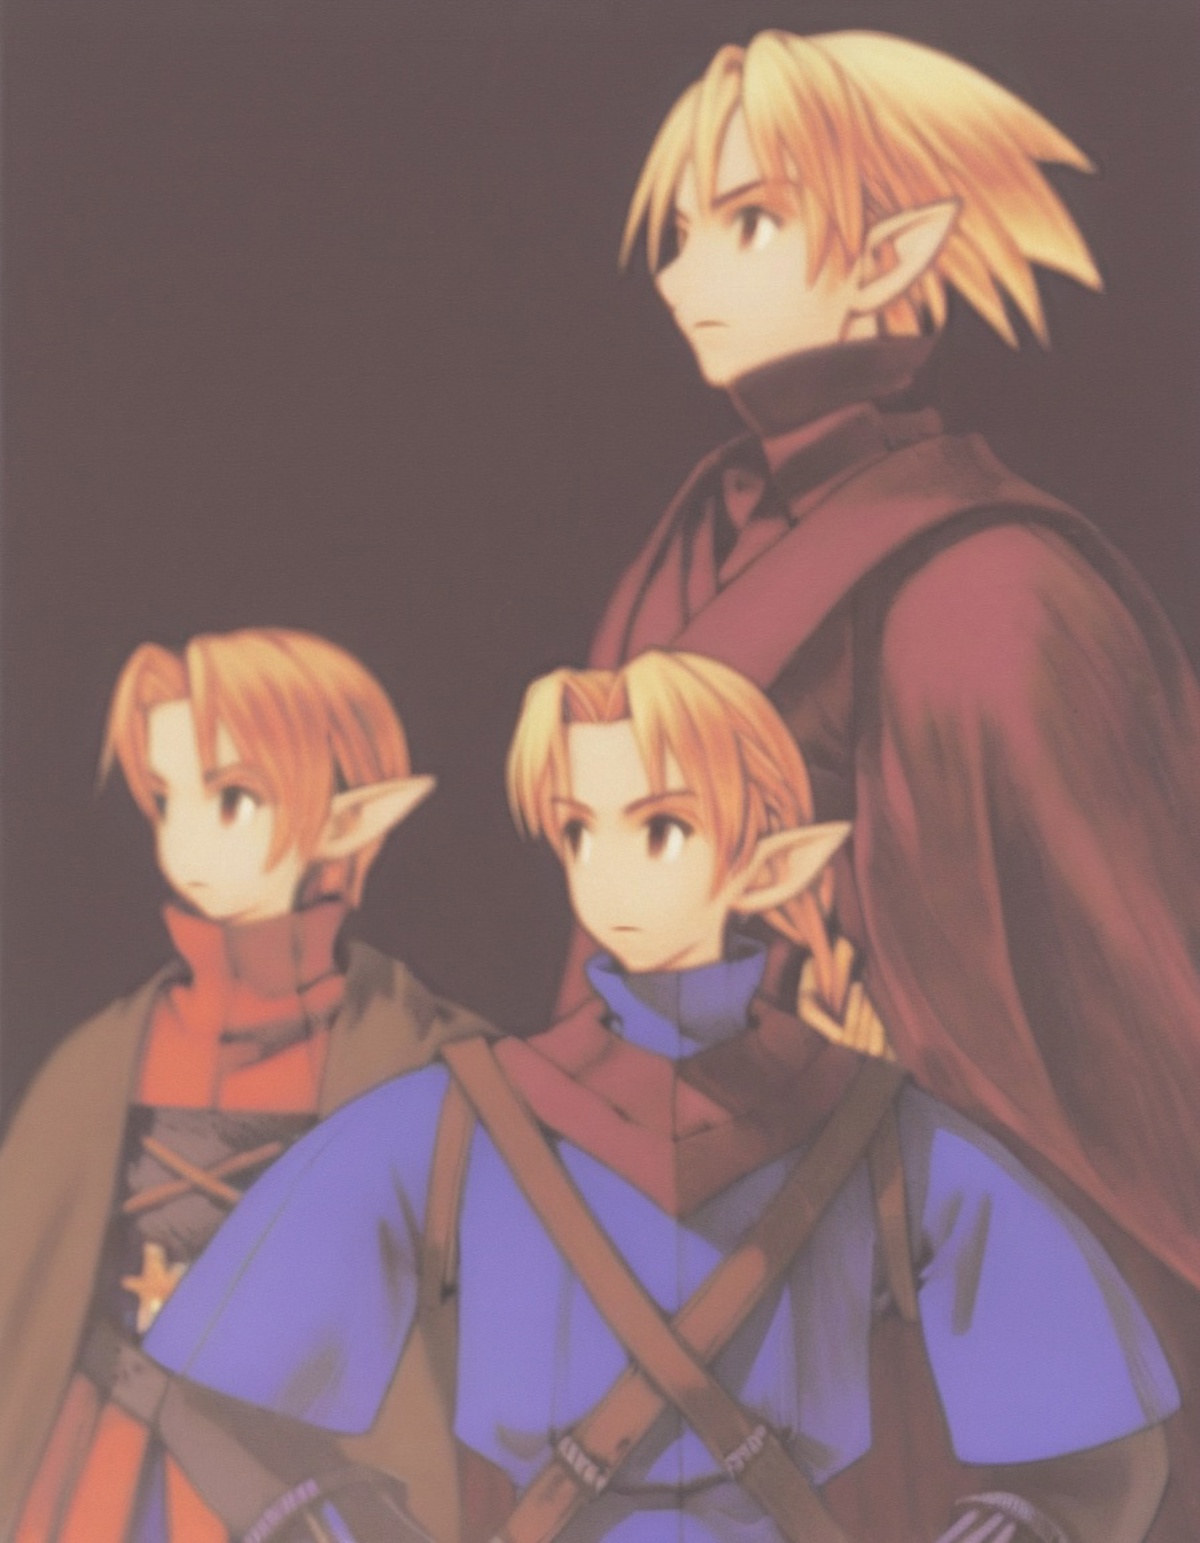 Final Fantasy Tactics XL - Akihiko Yoshida Style image by Dweeb